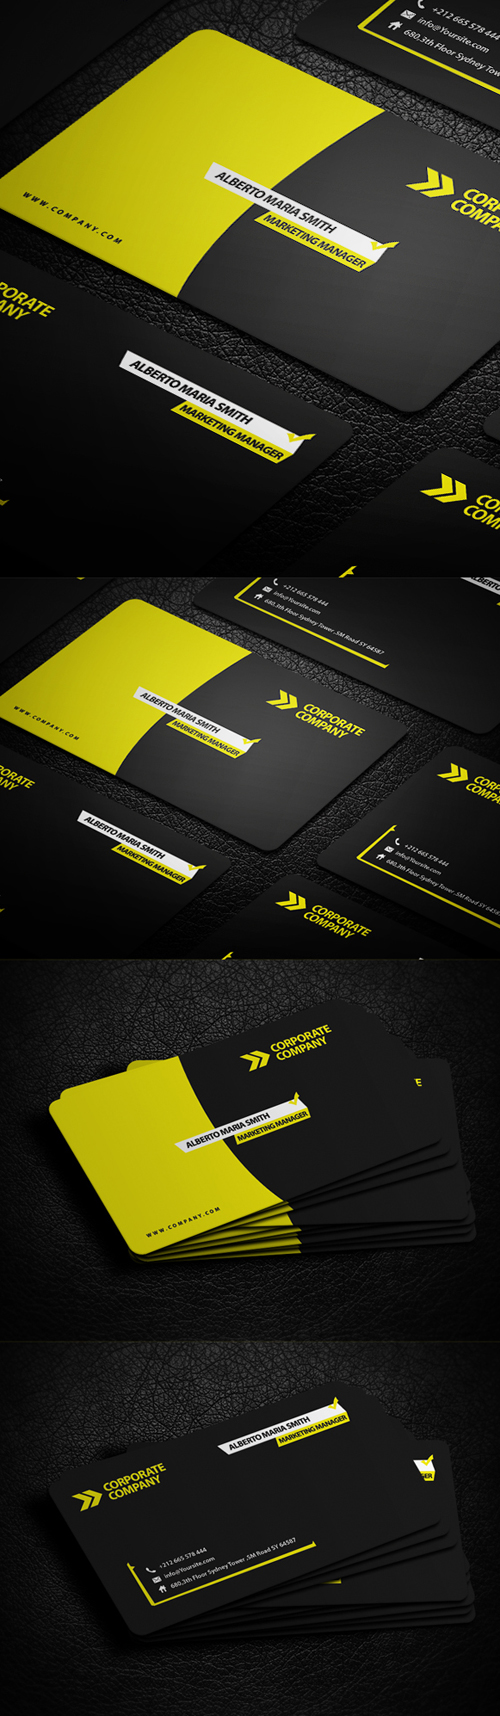 business cards template design - 11